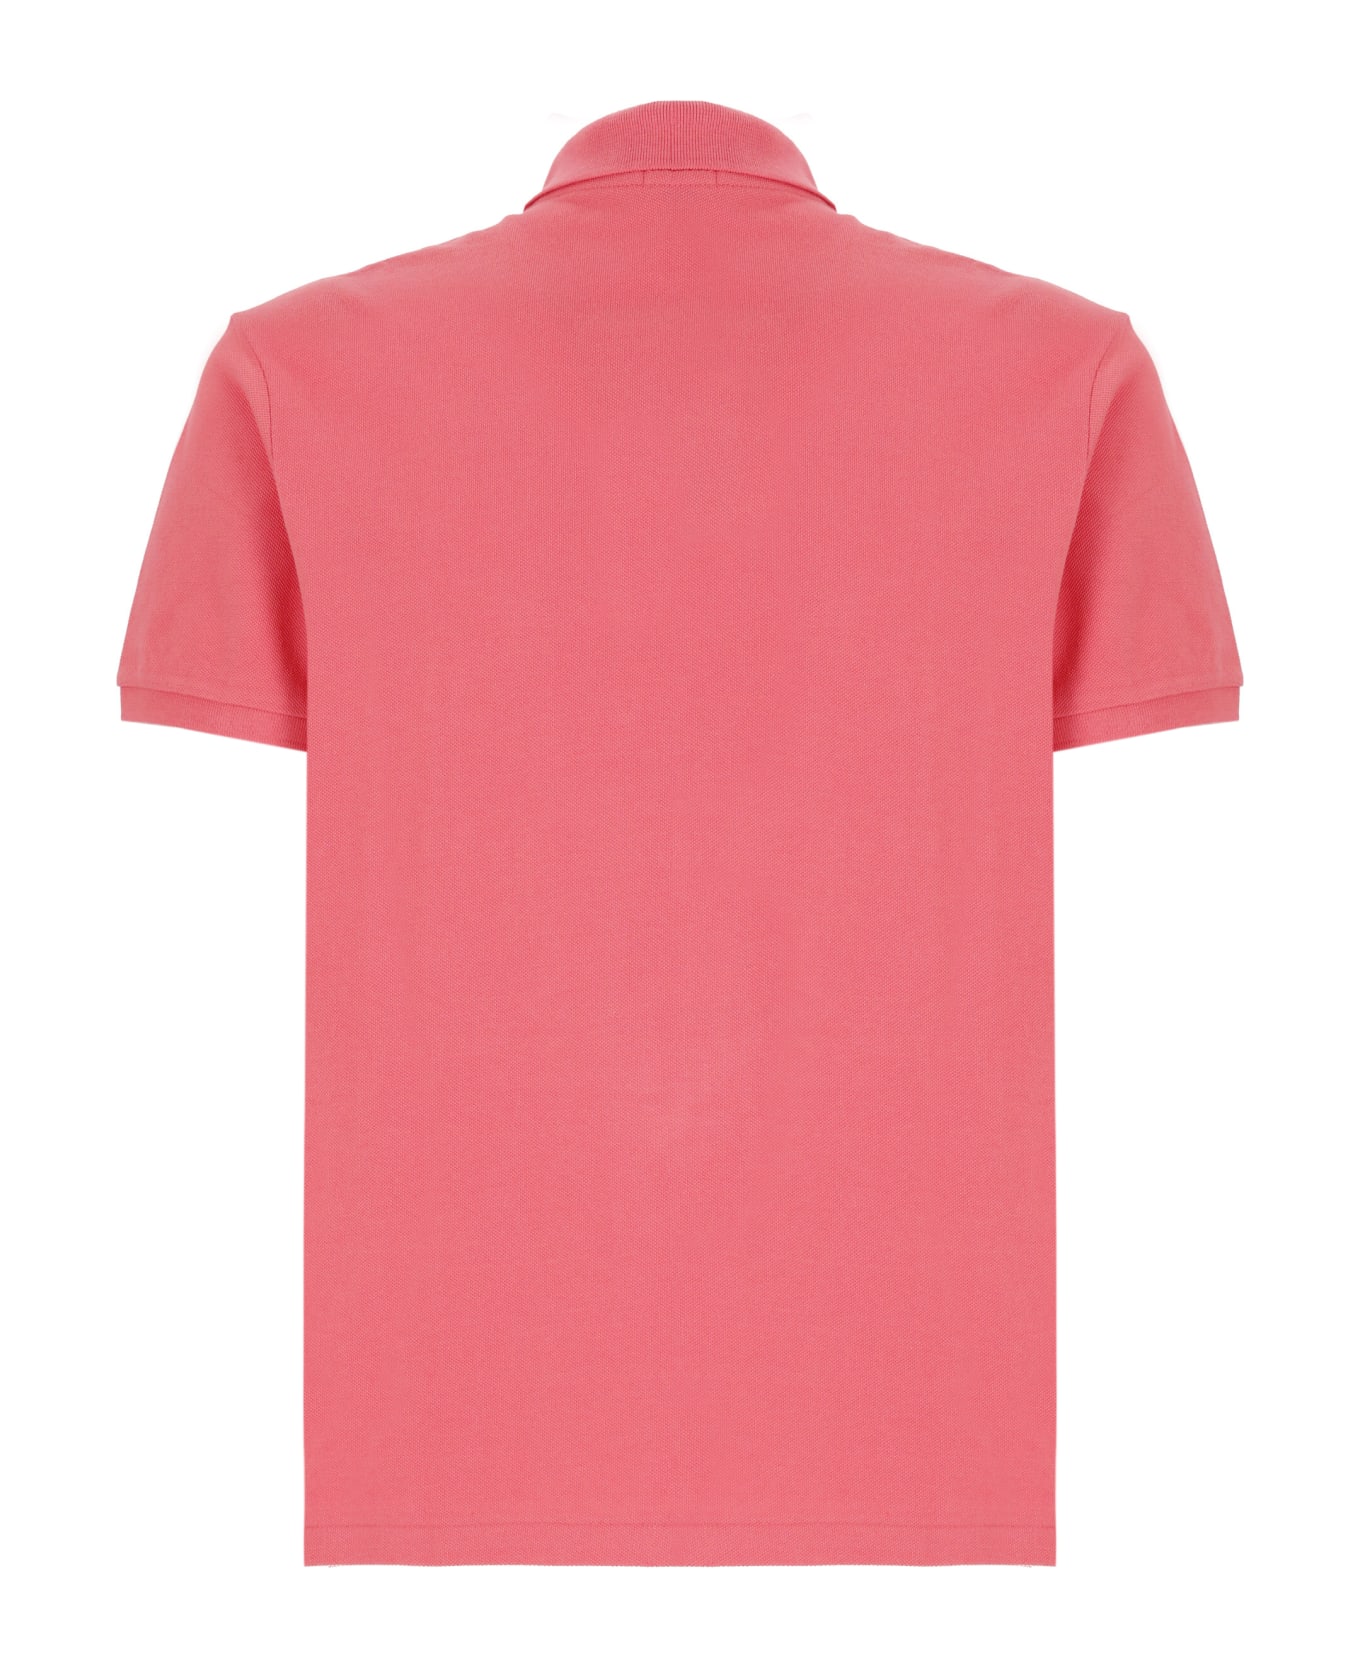 Polo Ralph Lauren Pony Shirt Polo Shirt - Red ポロシャツ